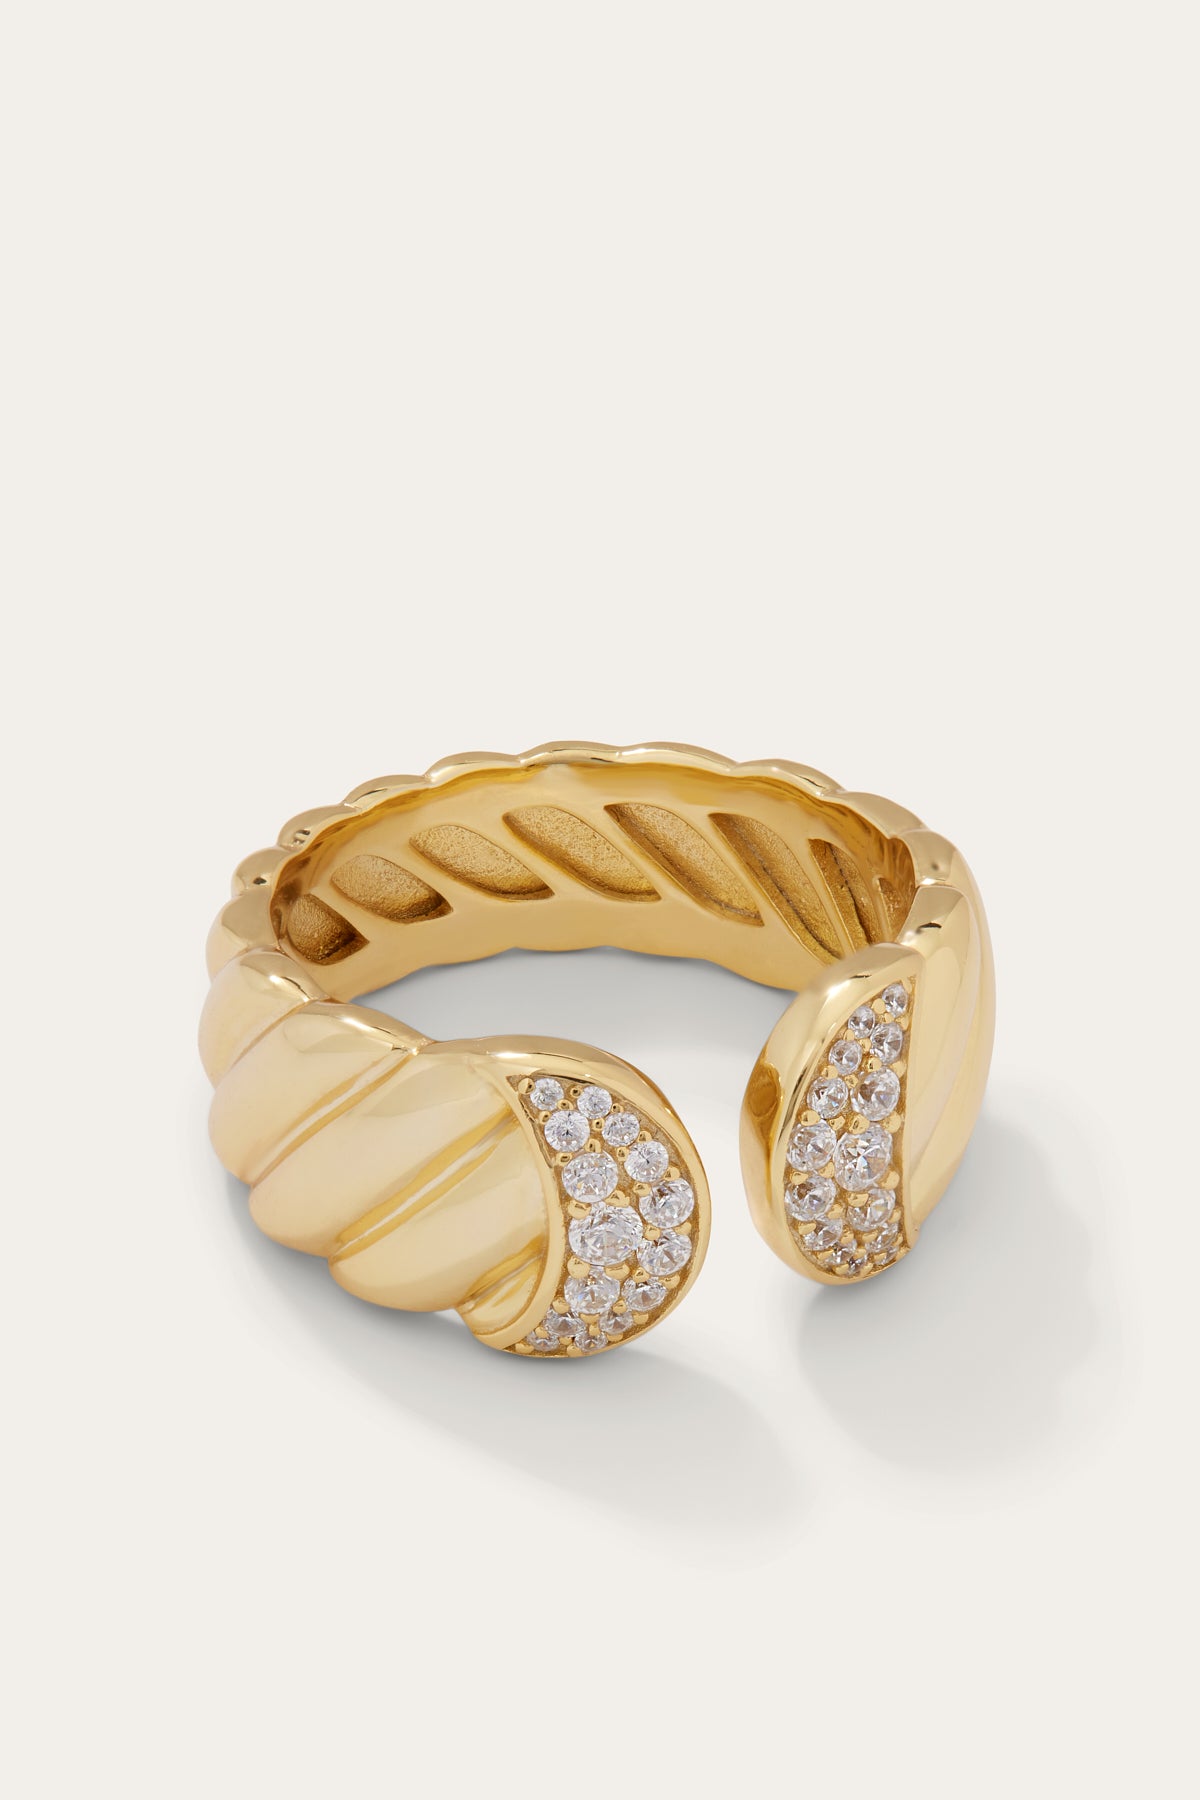 Speira Fortuna gold vermeil ring